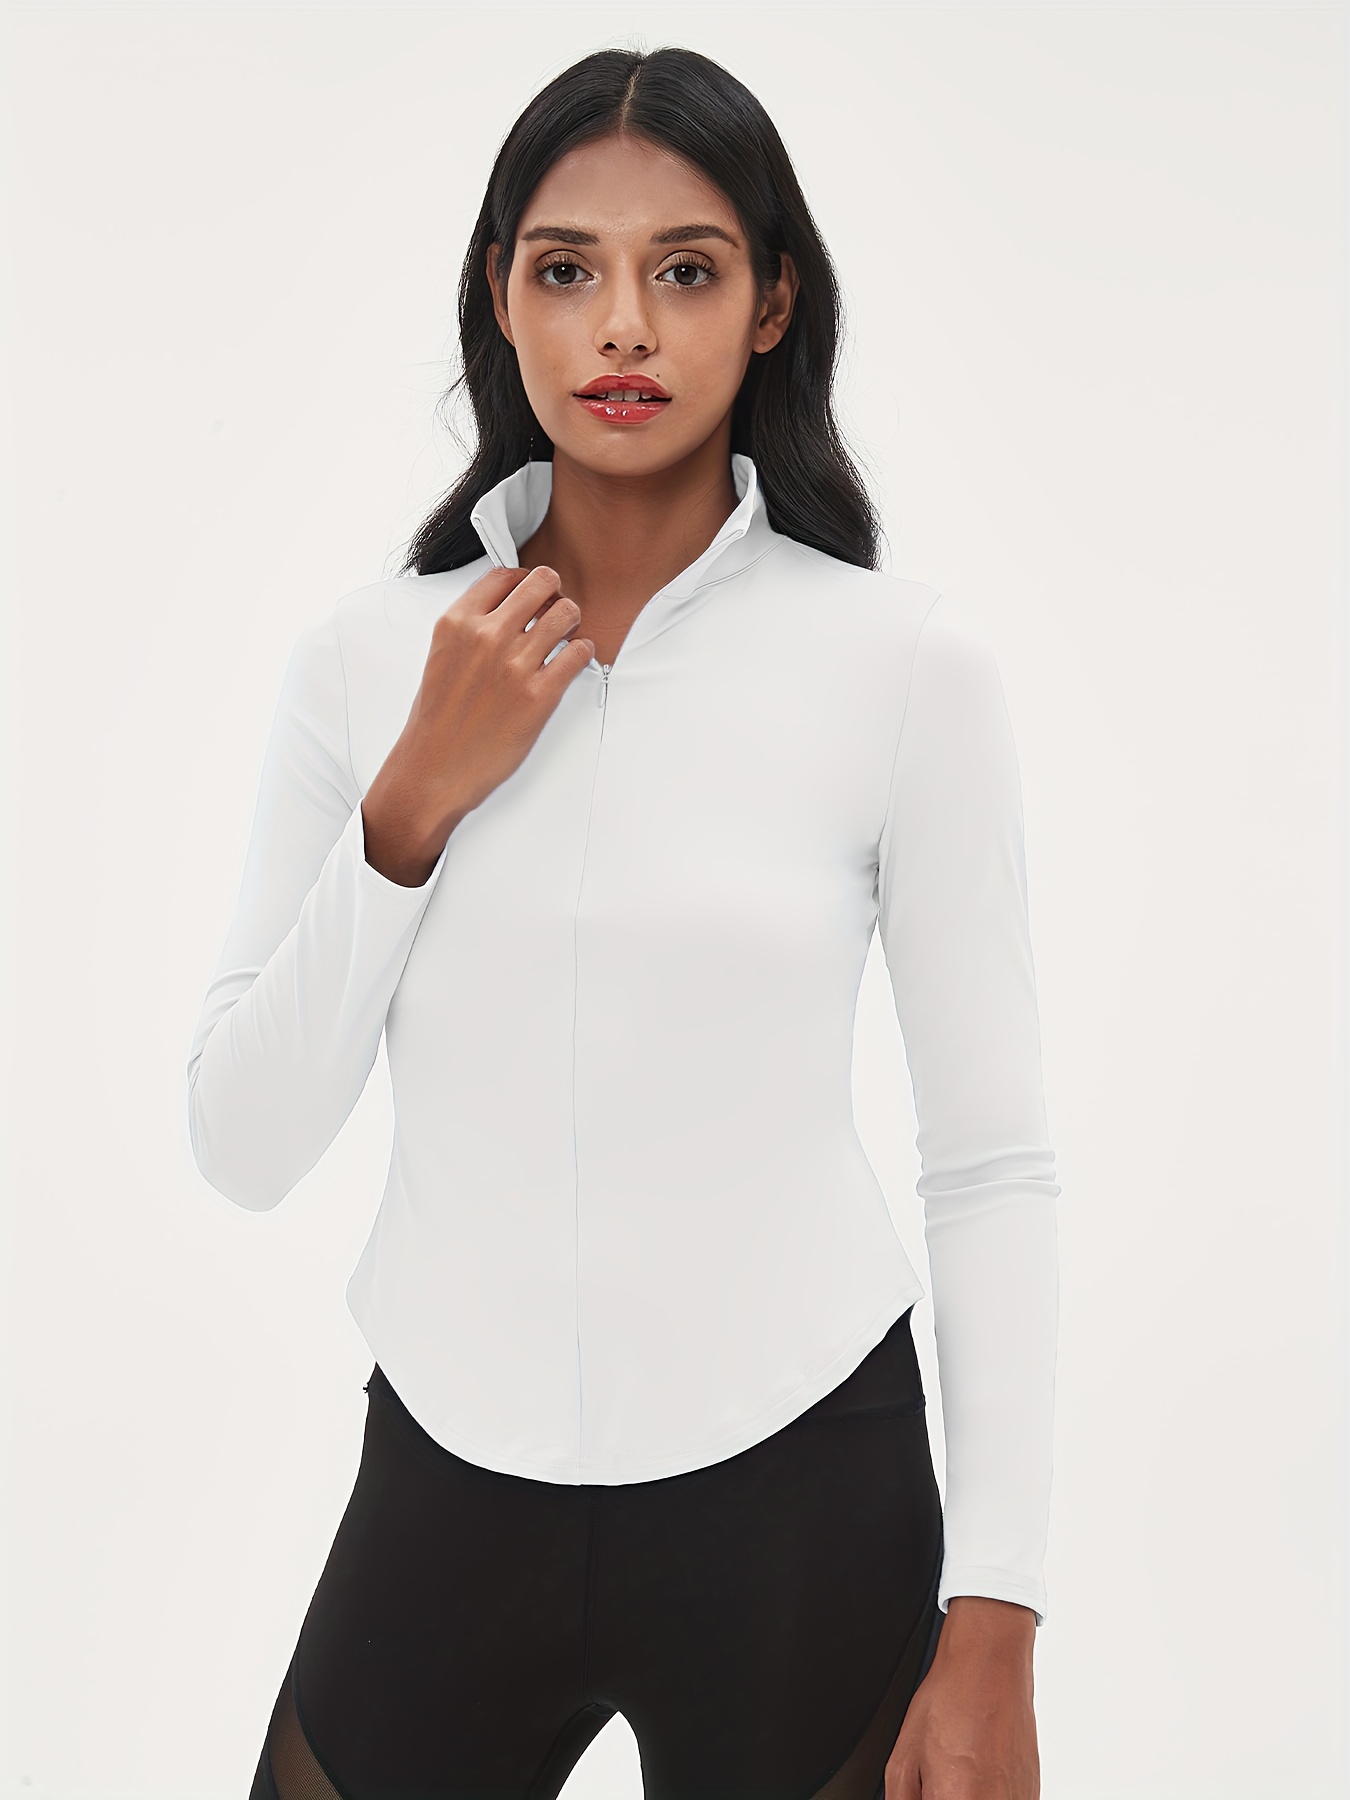 Women Long Sleeve Yoga Shirt Half-Zip Built in Bra Crop Tops Outdoor  Athletic Jacket with Thumb Hole (Red, XS) price in UAE,  UAE